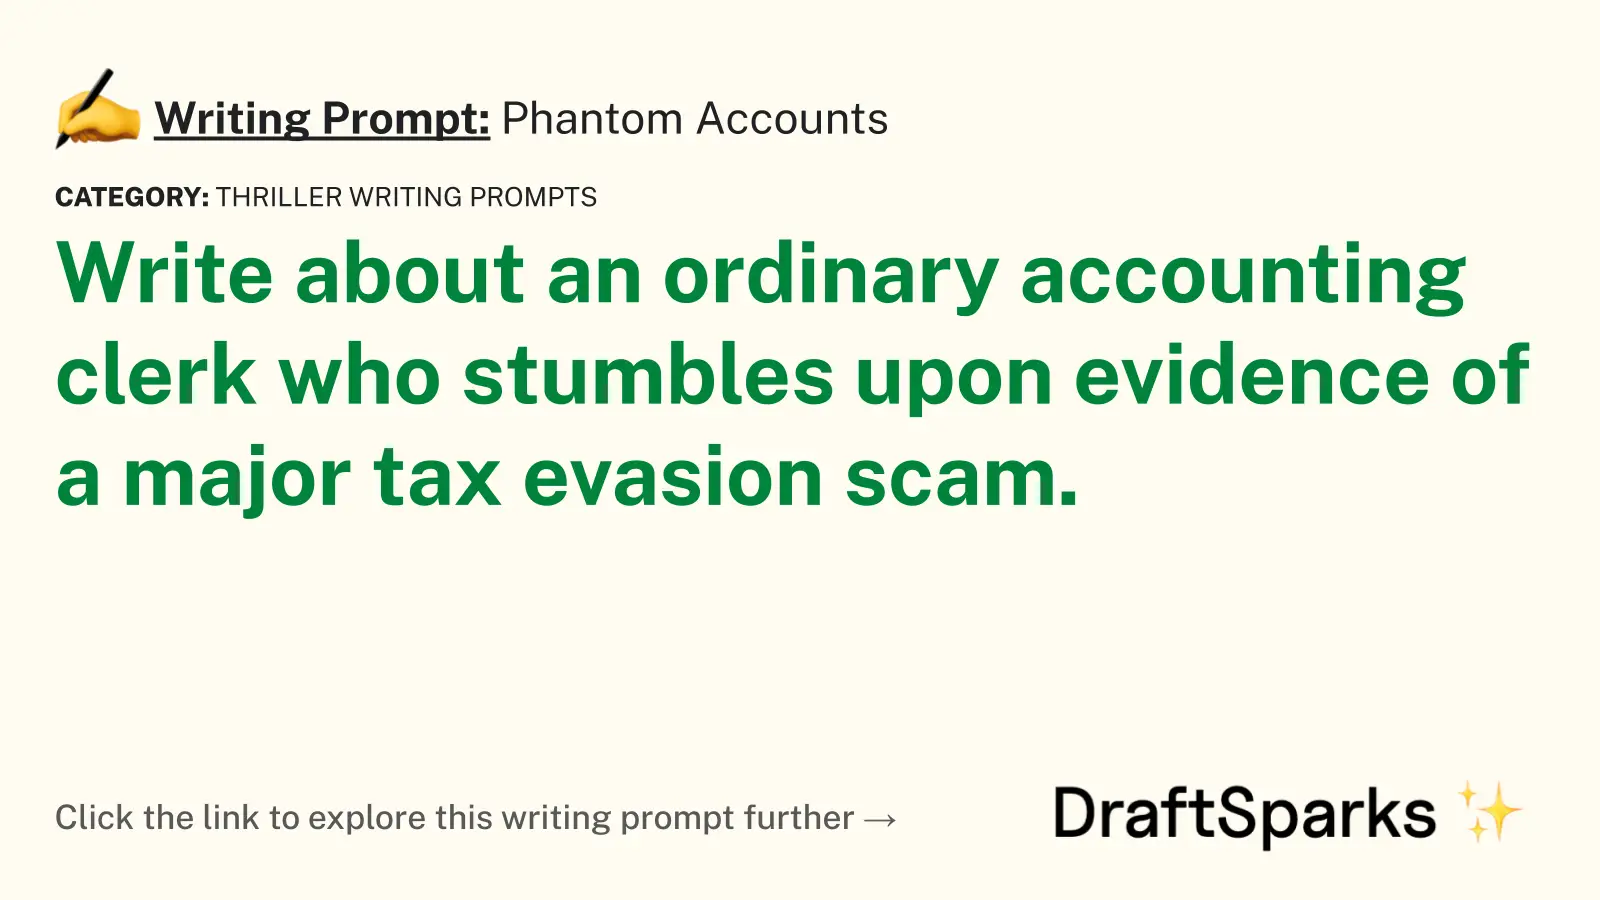 Phantom Accounts